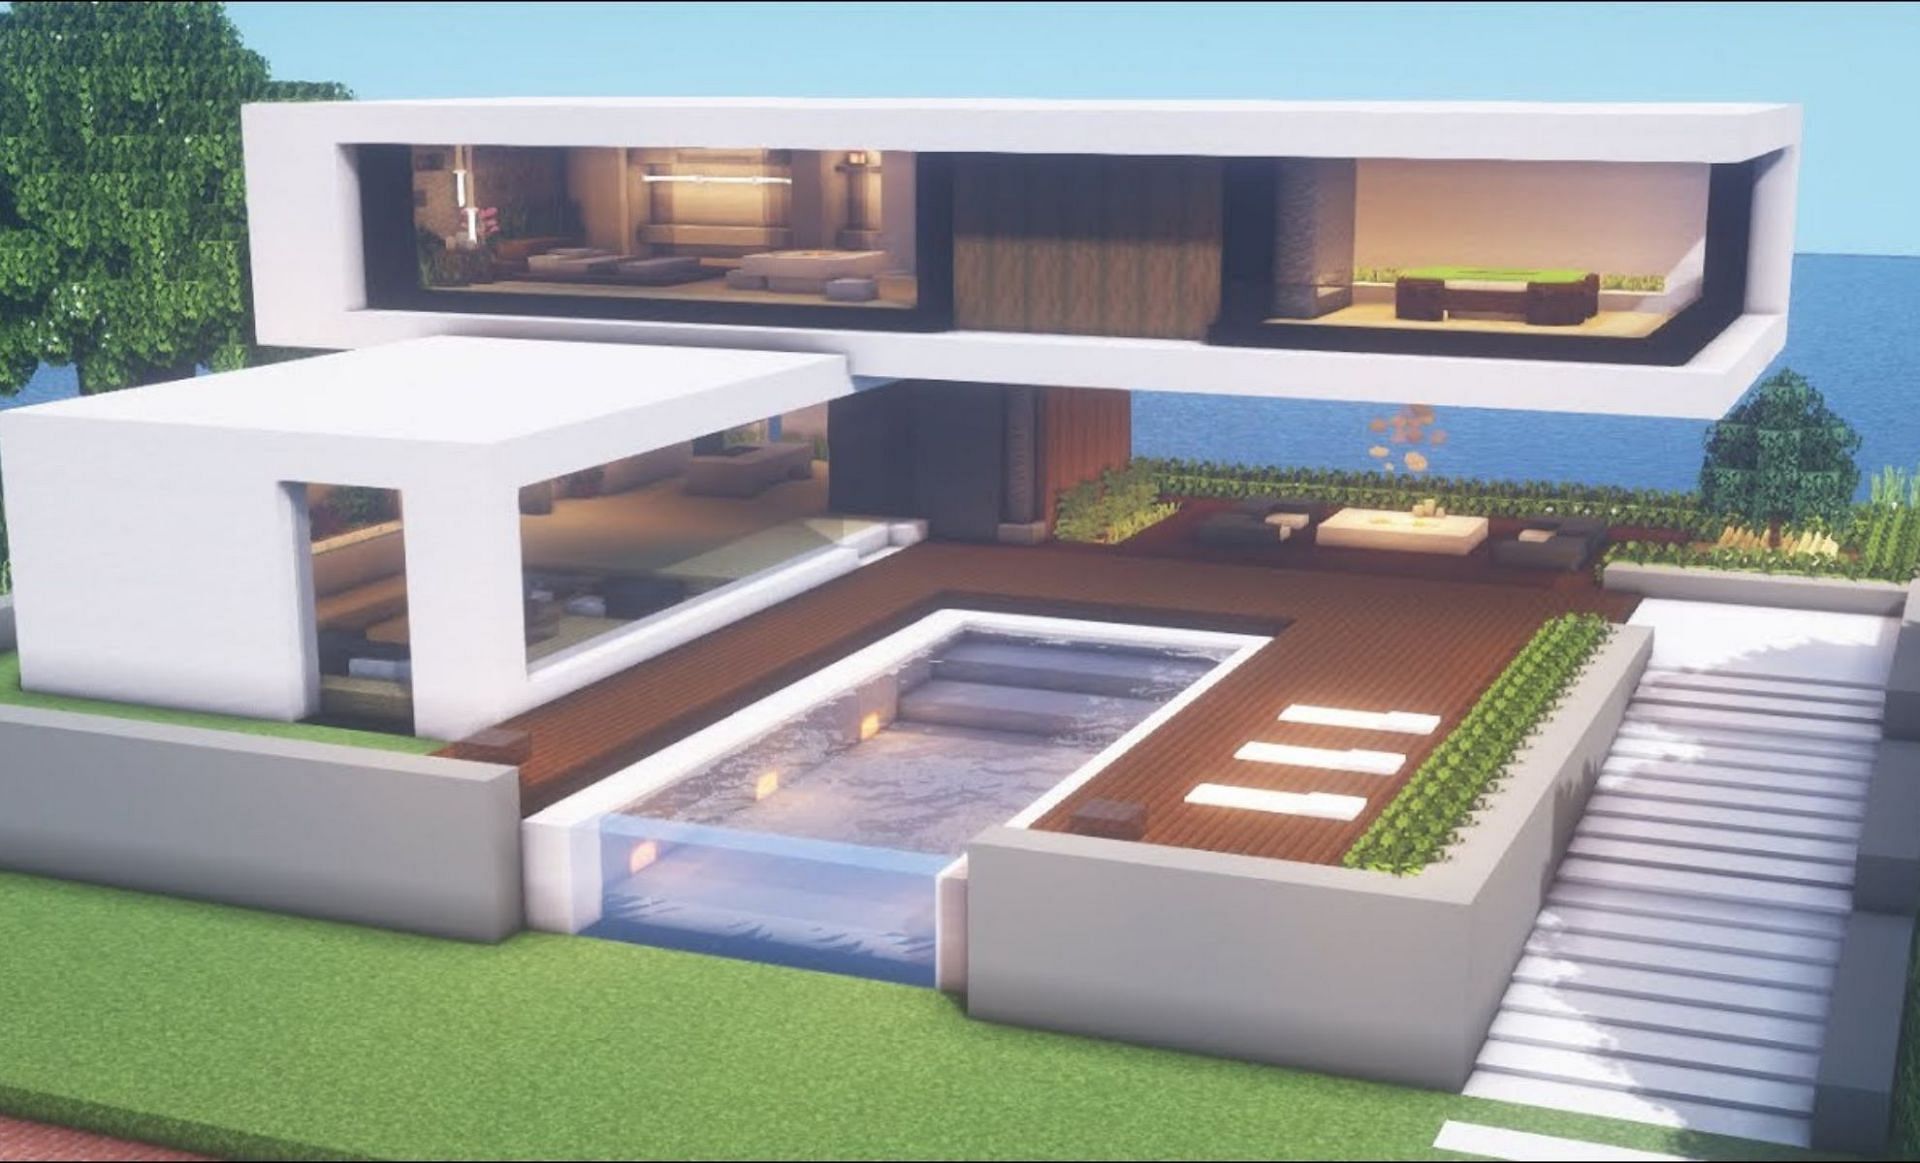 Casa moderna Minecraft interior - Minecraft Descargas